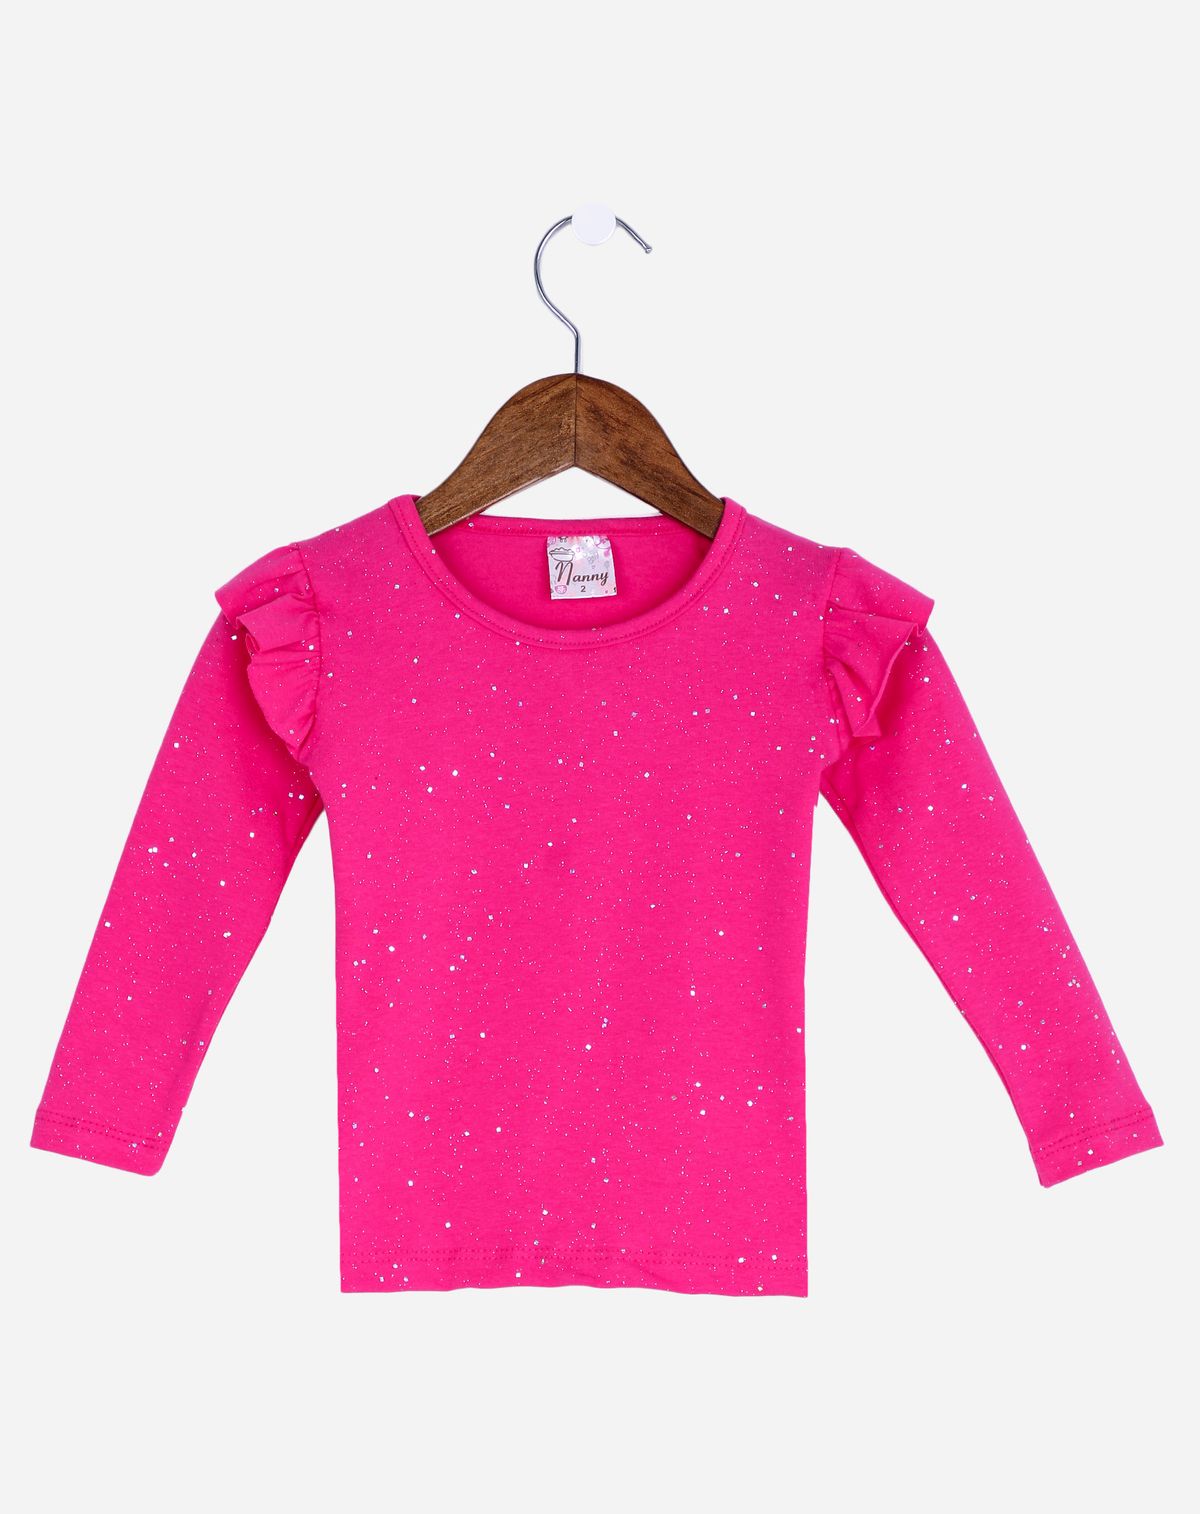 699140002-camiseta-manga-longa-infantil-menina---tam.-1-a-3-anos-pink-2-dc4